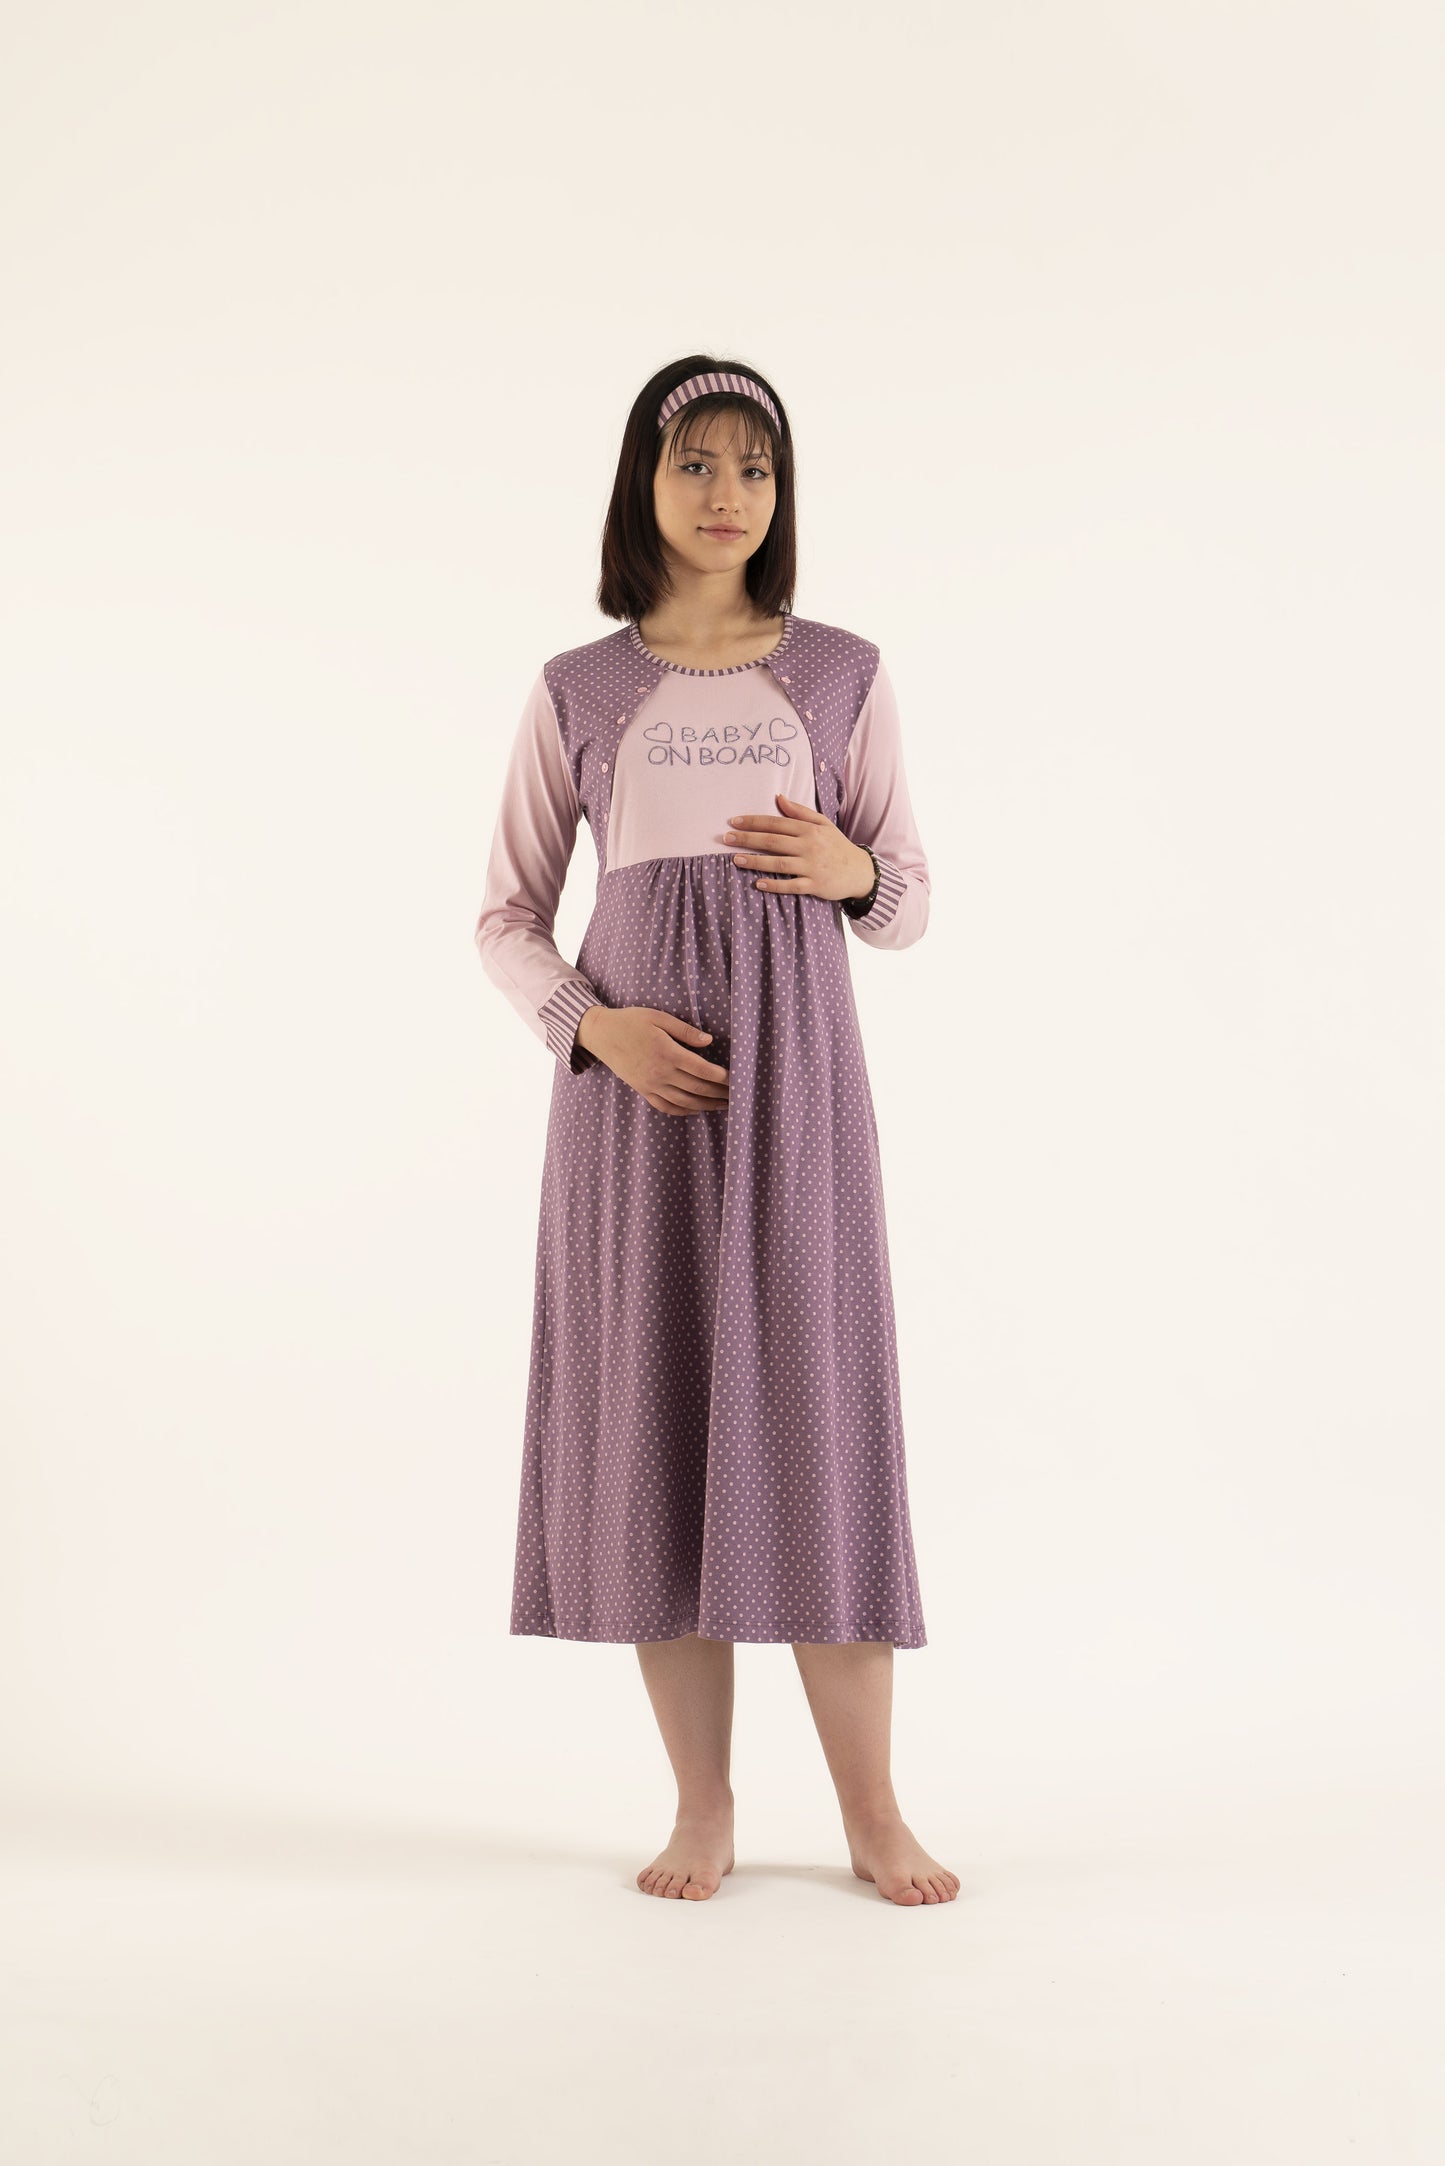 Pinky Purple Cotton Comfy maternity long sleeve nightwear-39